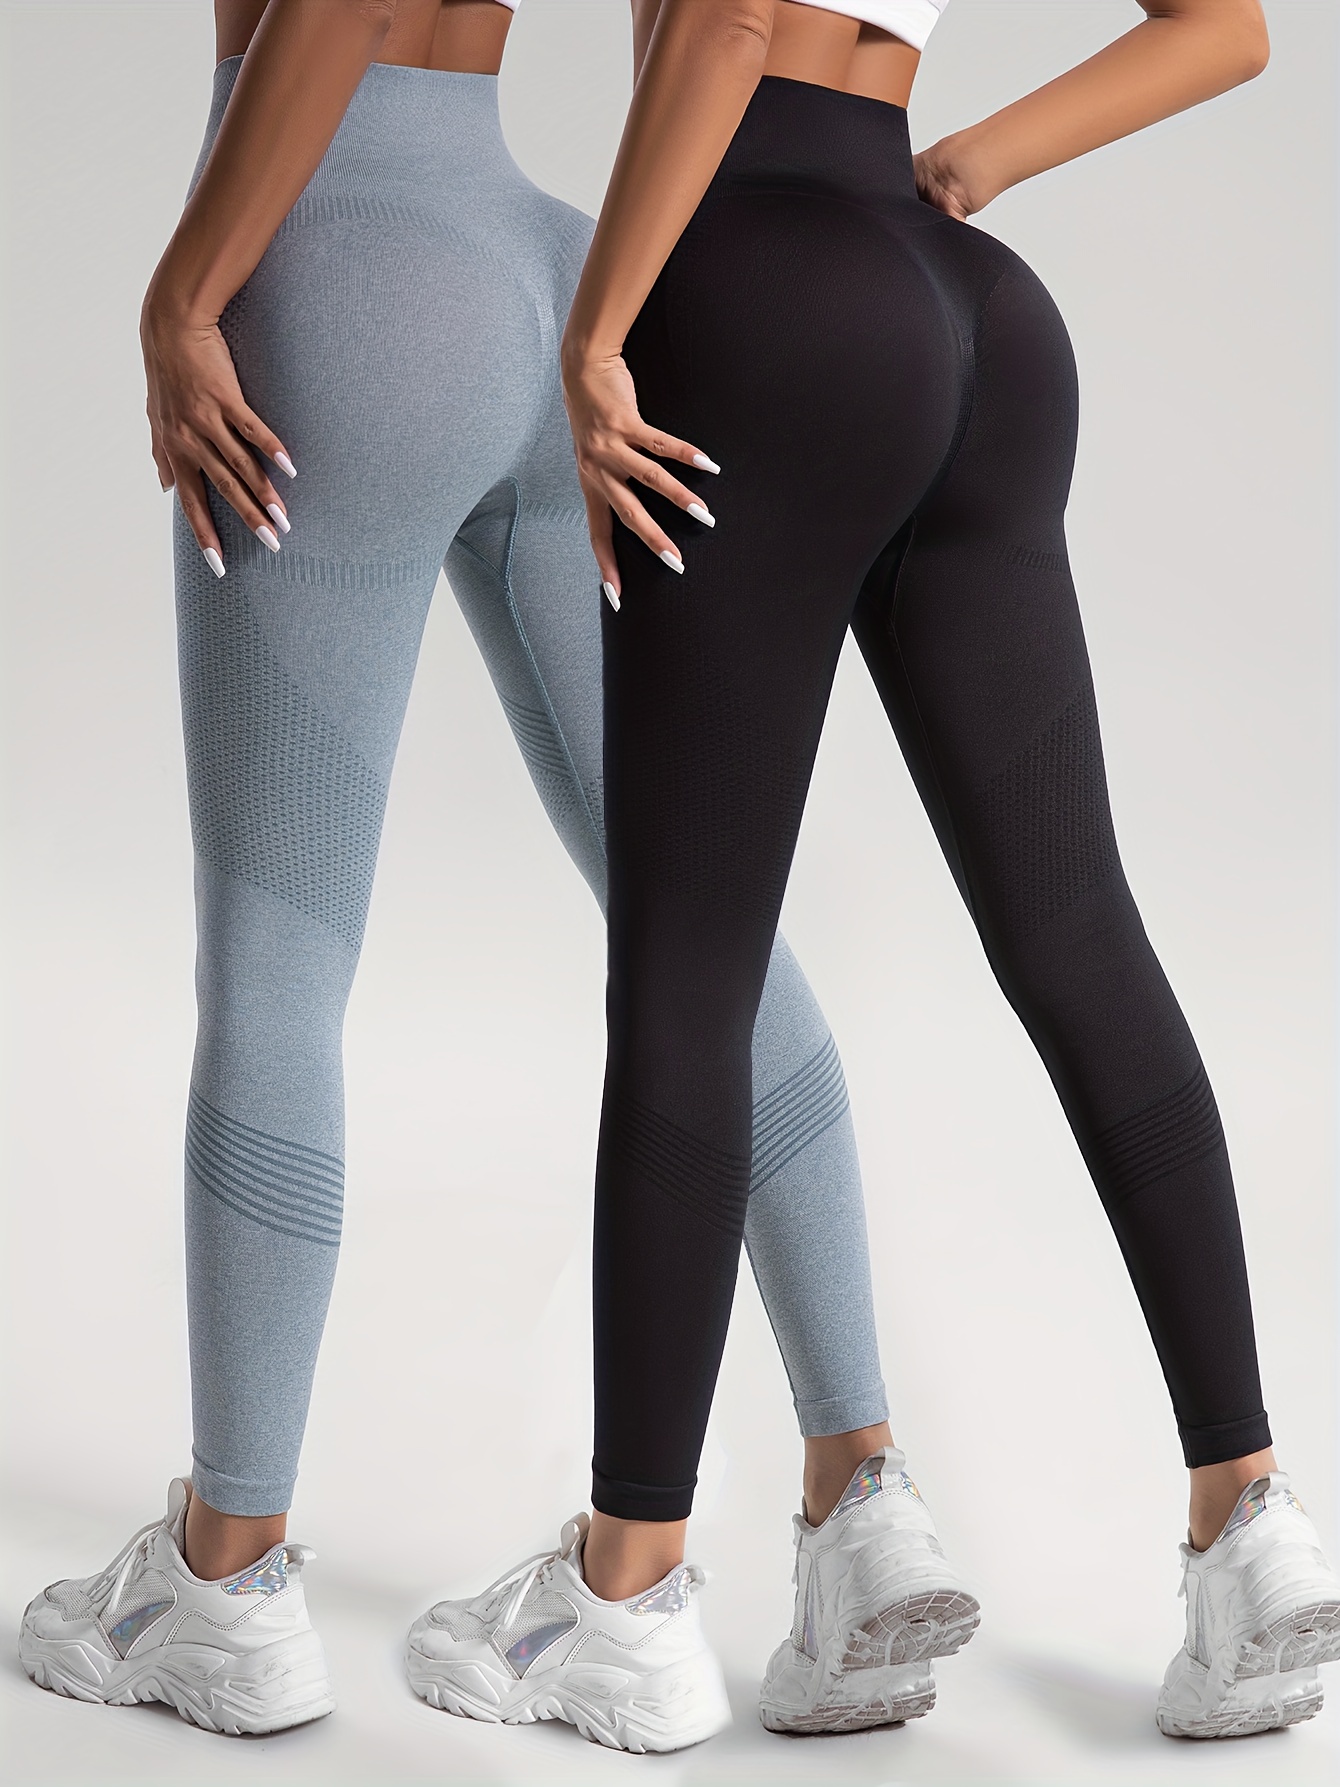 ZZAL hochtaillierte Leggings Frauen Yoga Strumpfhose Wärmeableitung und  Schnell Trocknende Kompression Athletic Legging Pants(Size:m,Color:hellgrau)  : : Fashion